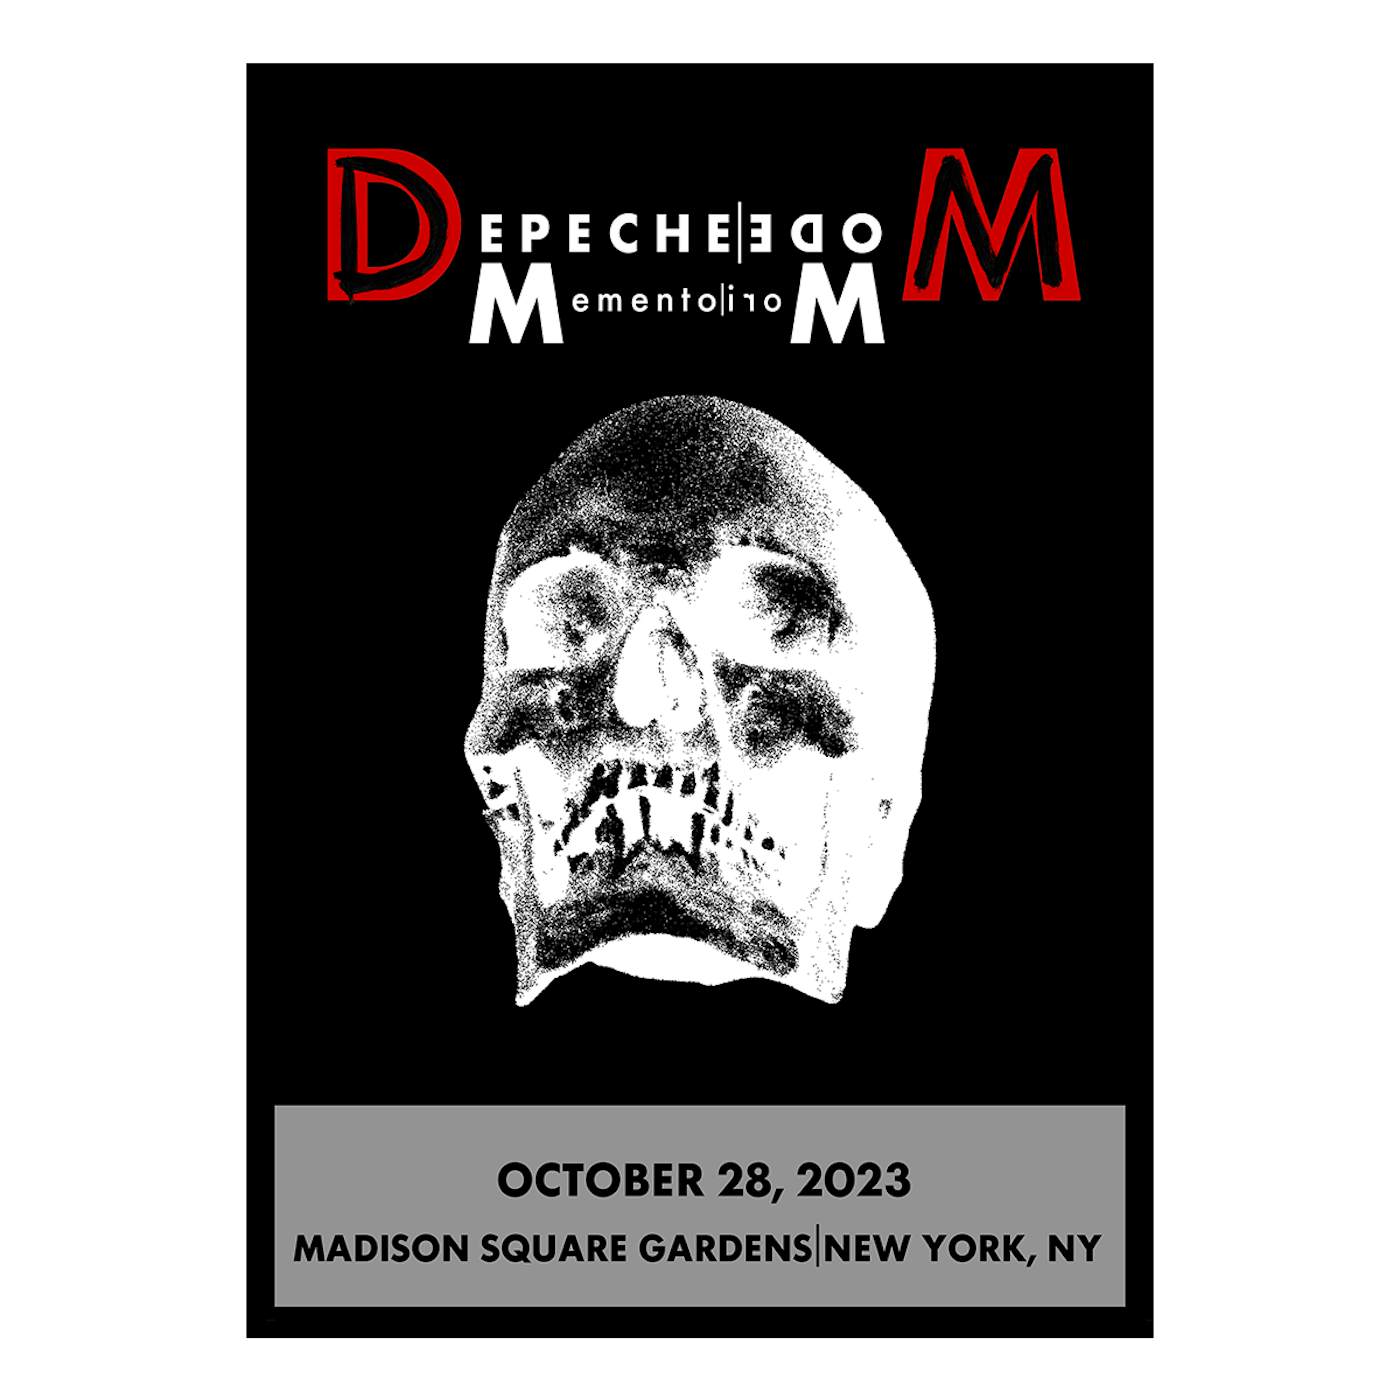 Depeche Mode Memento Mori Tour 2023 New York Screen Print Poster Limited Edition